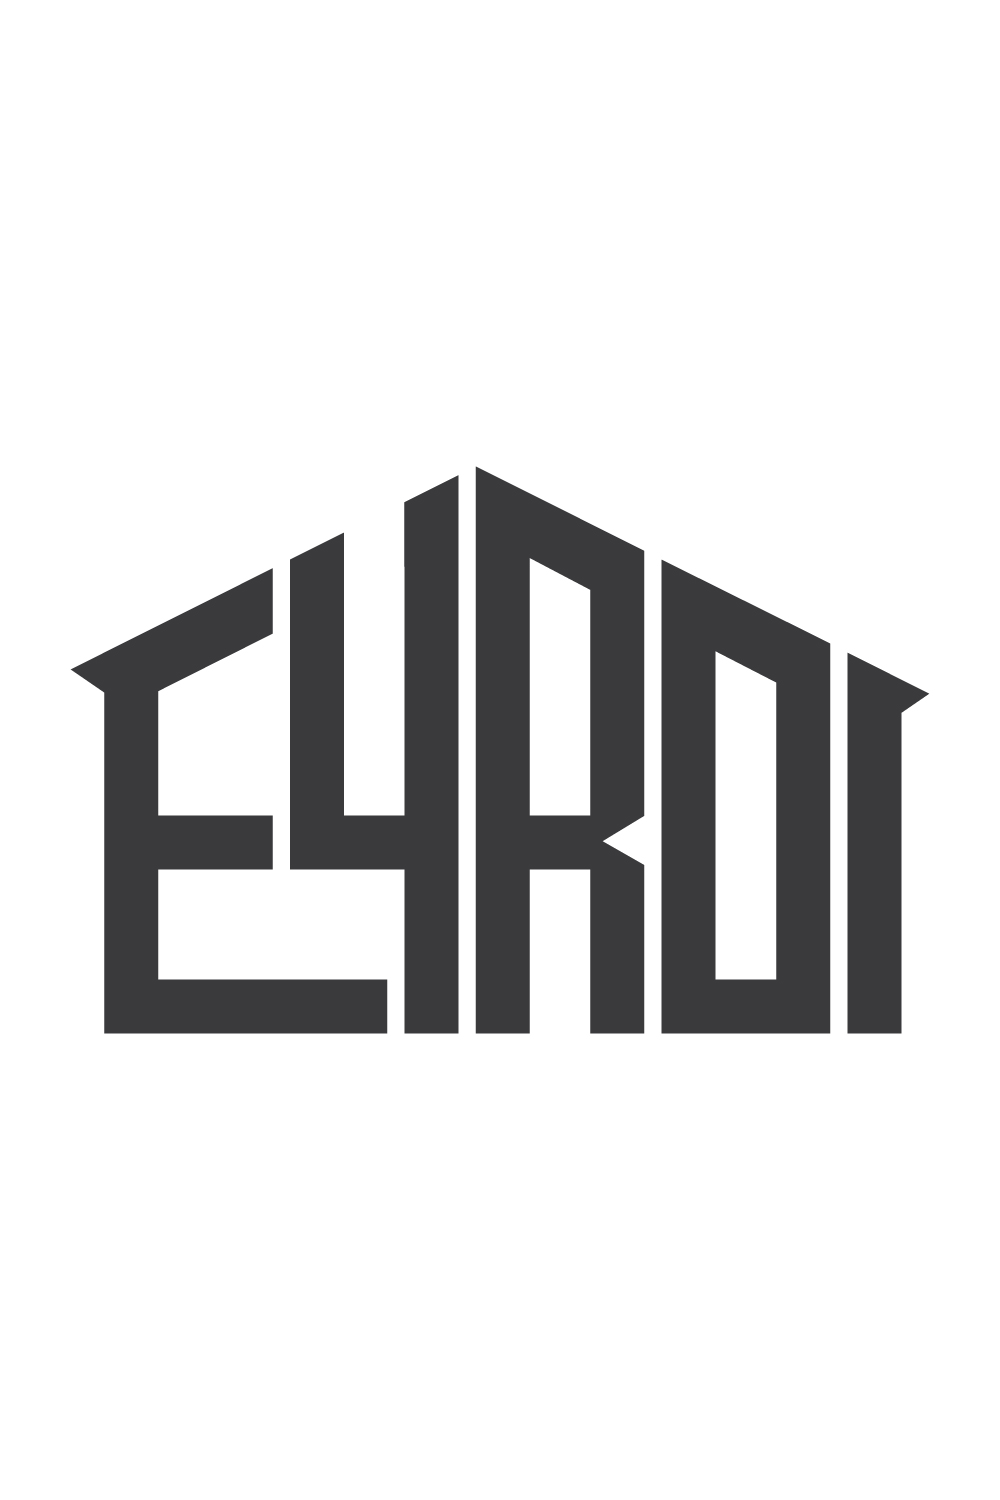 E4ROI Home Logo pinterest preview image.